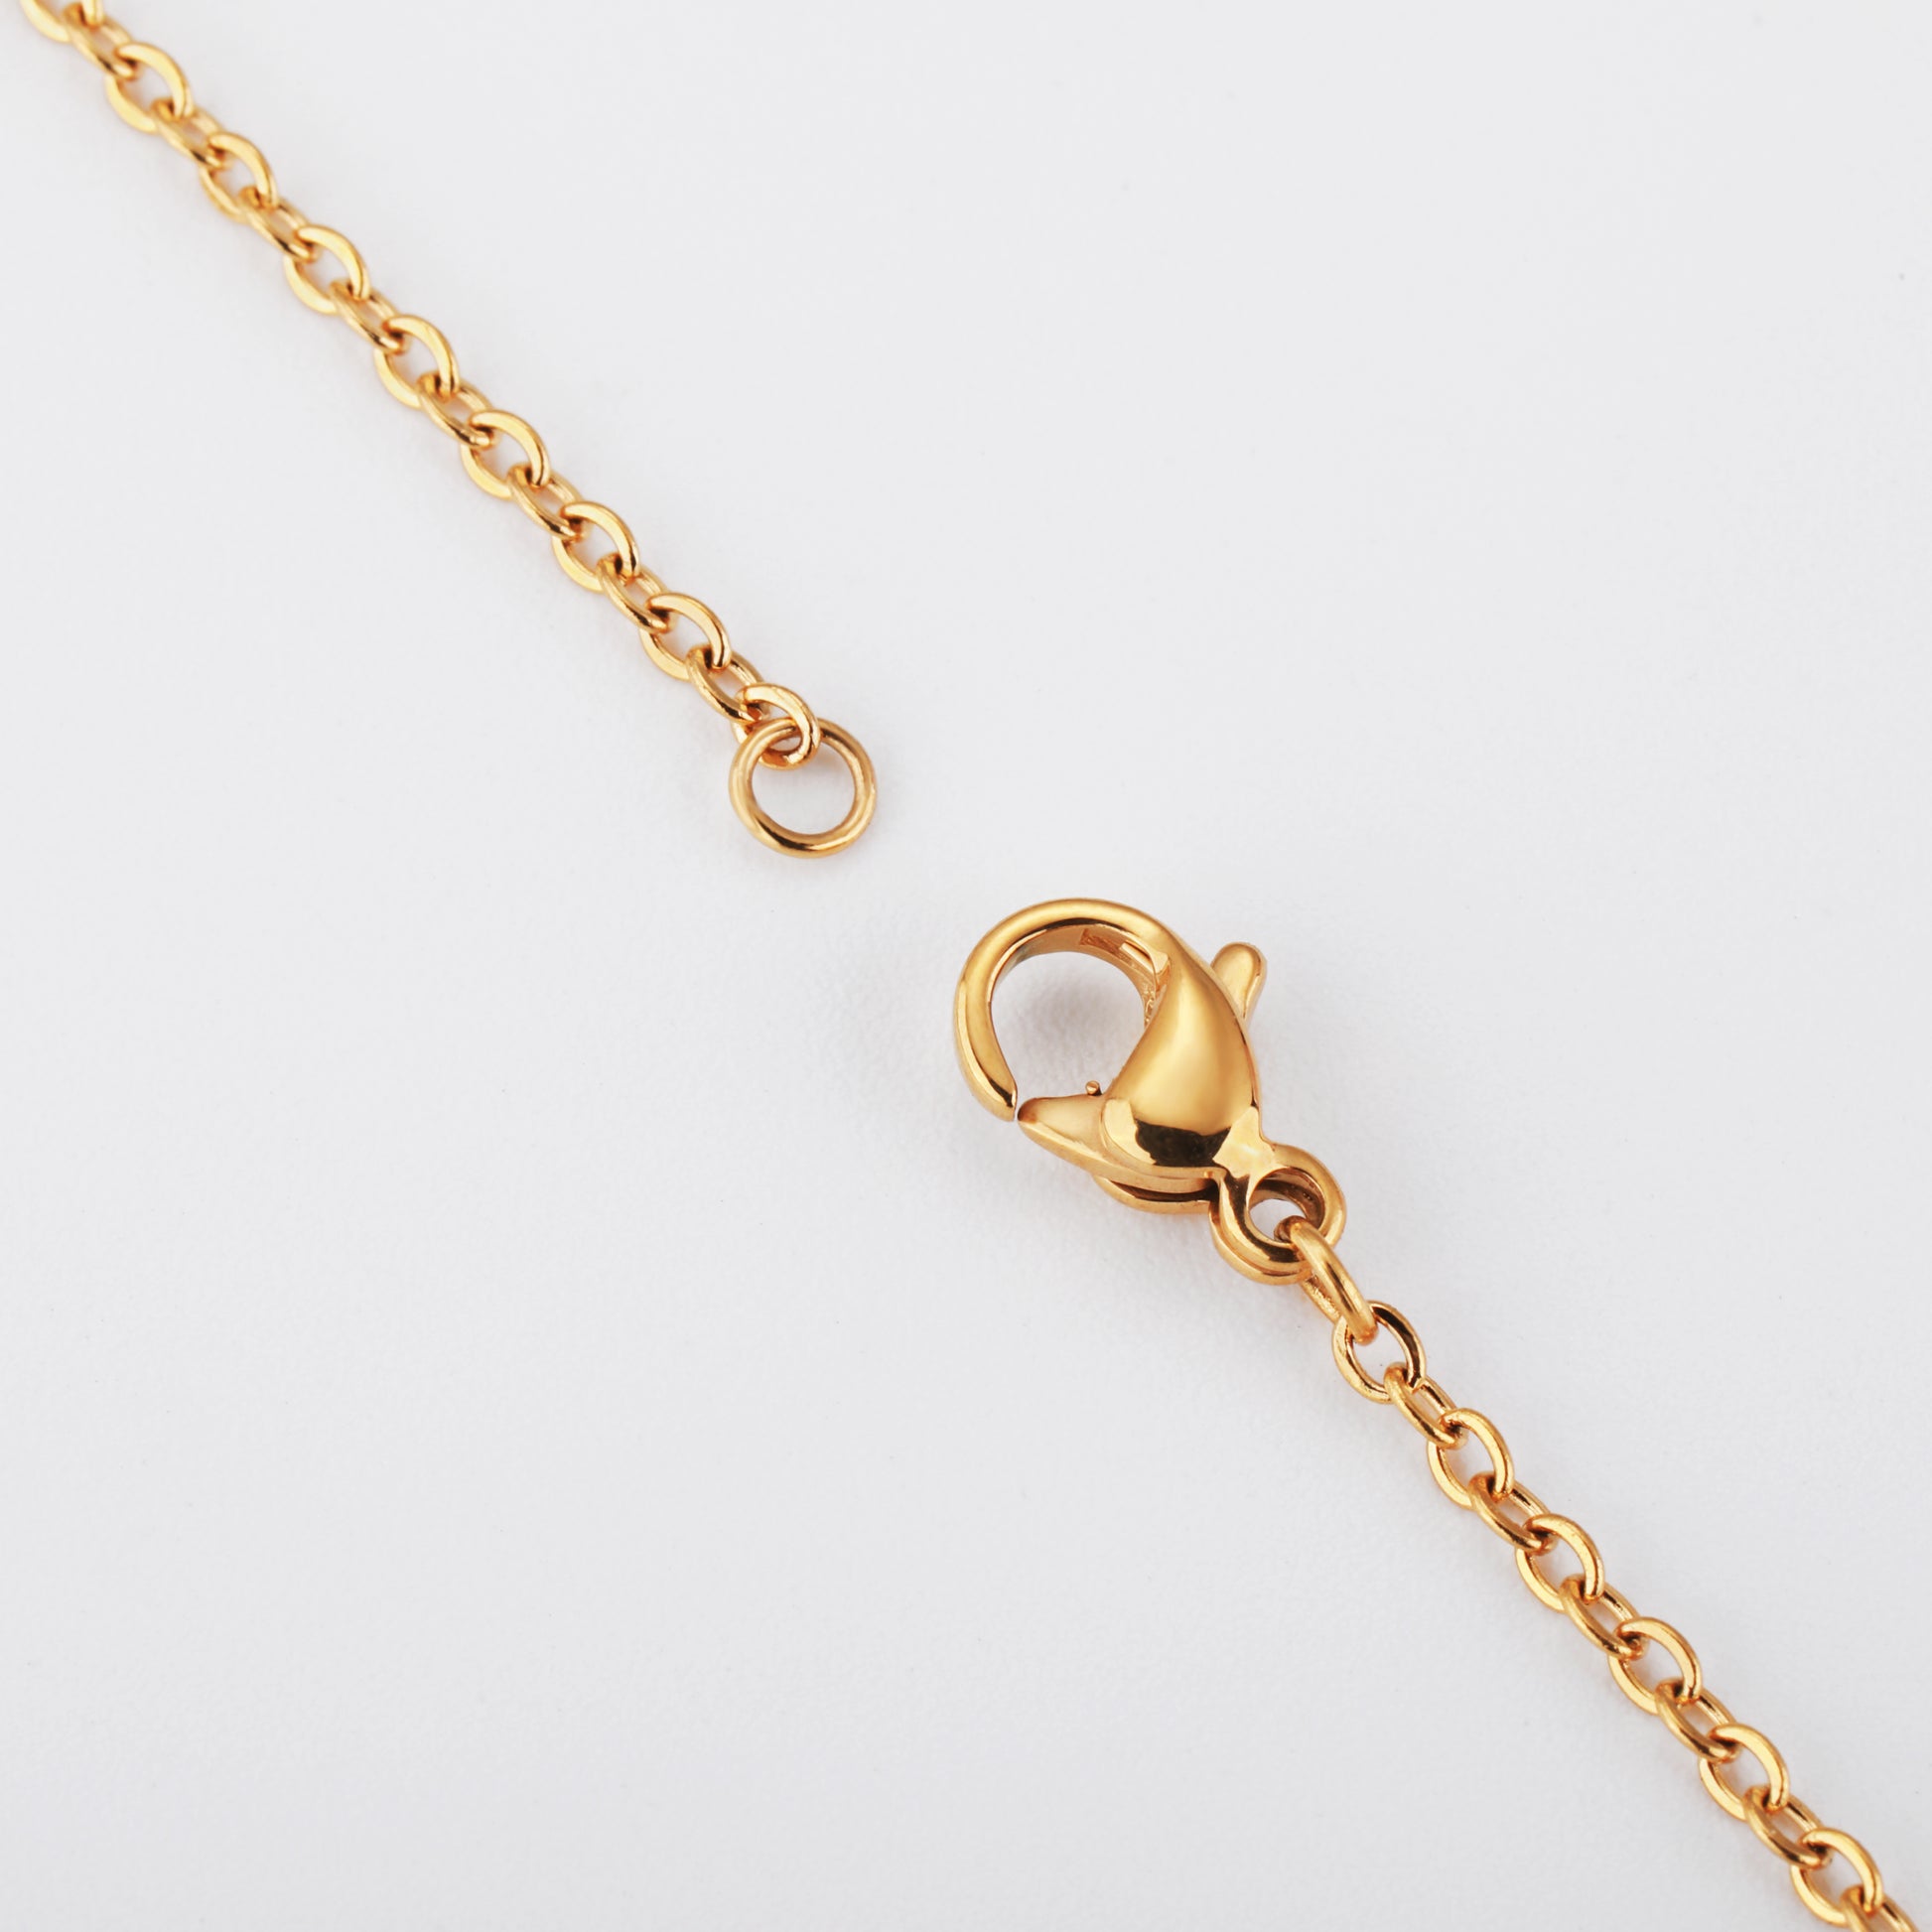 Darjali Jewelry Radiant Star Necklace 18K Gold Extension